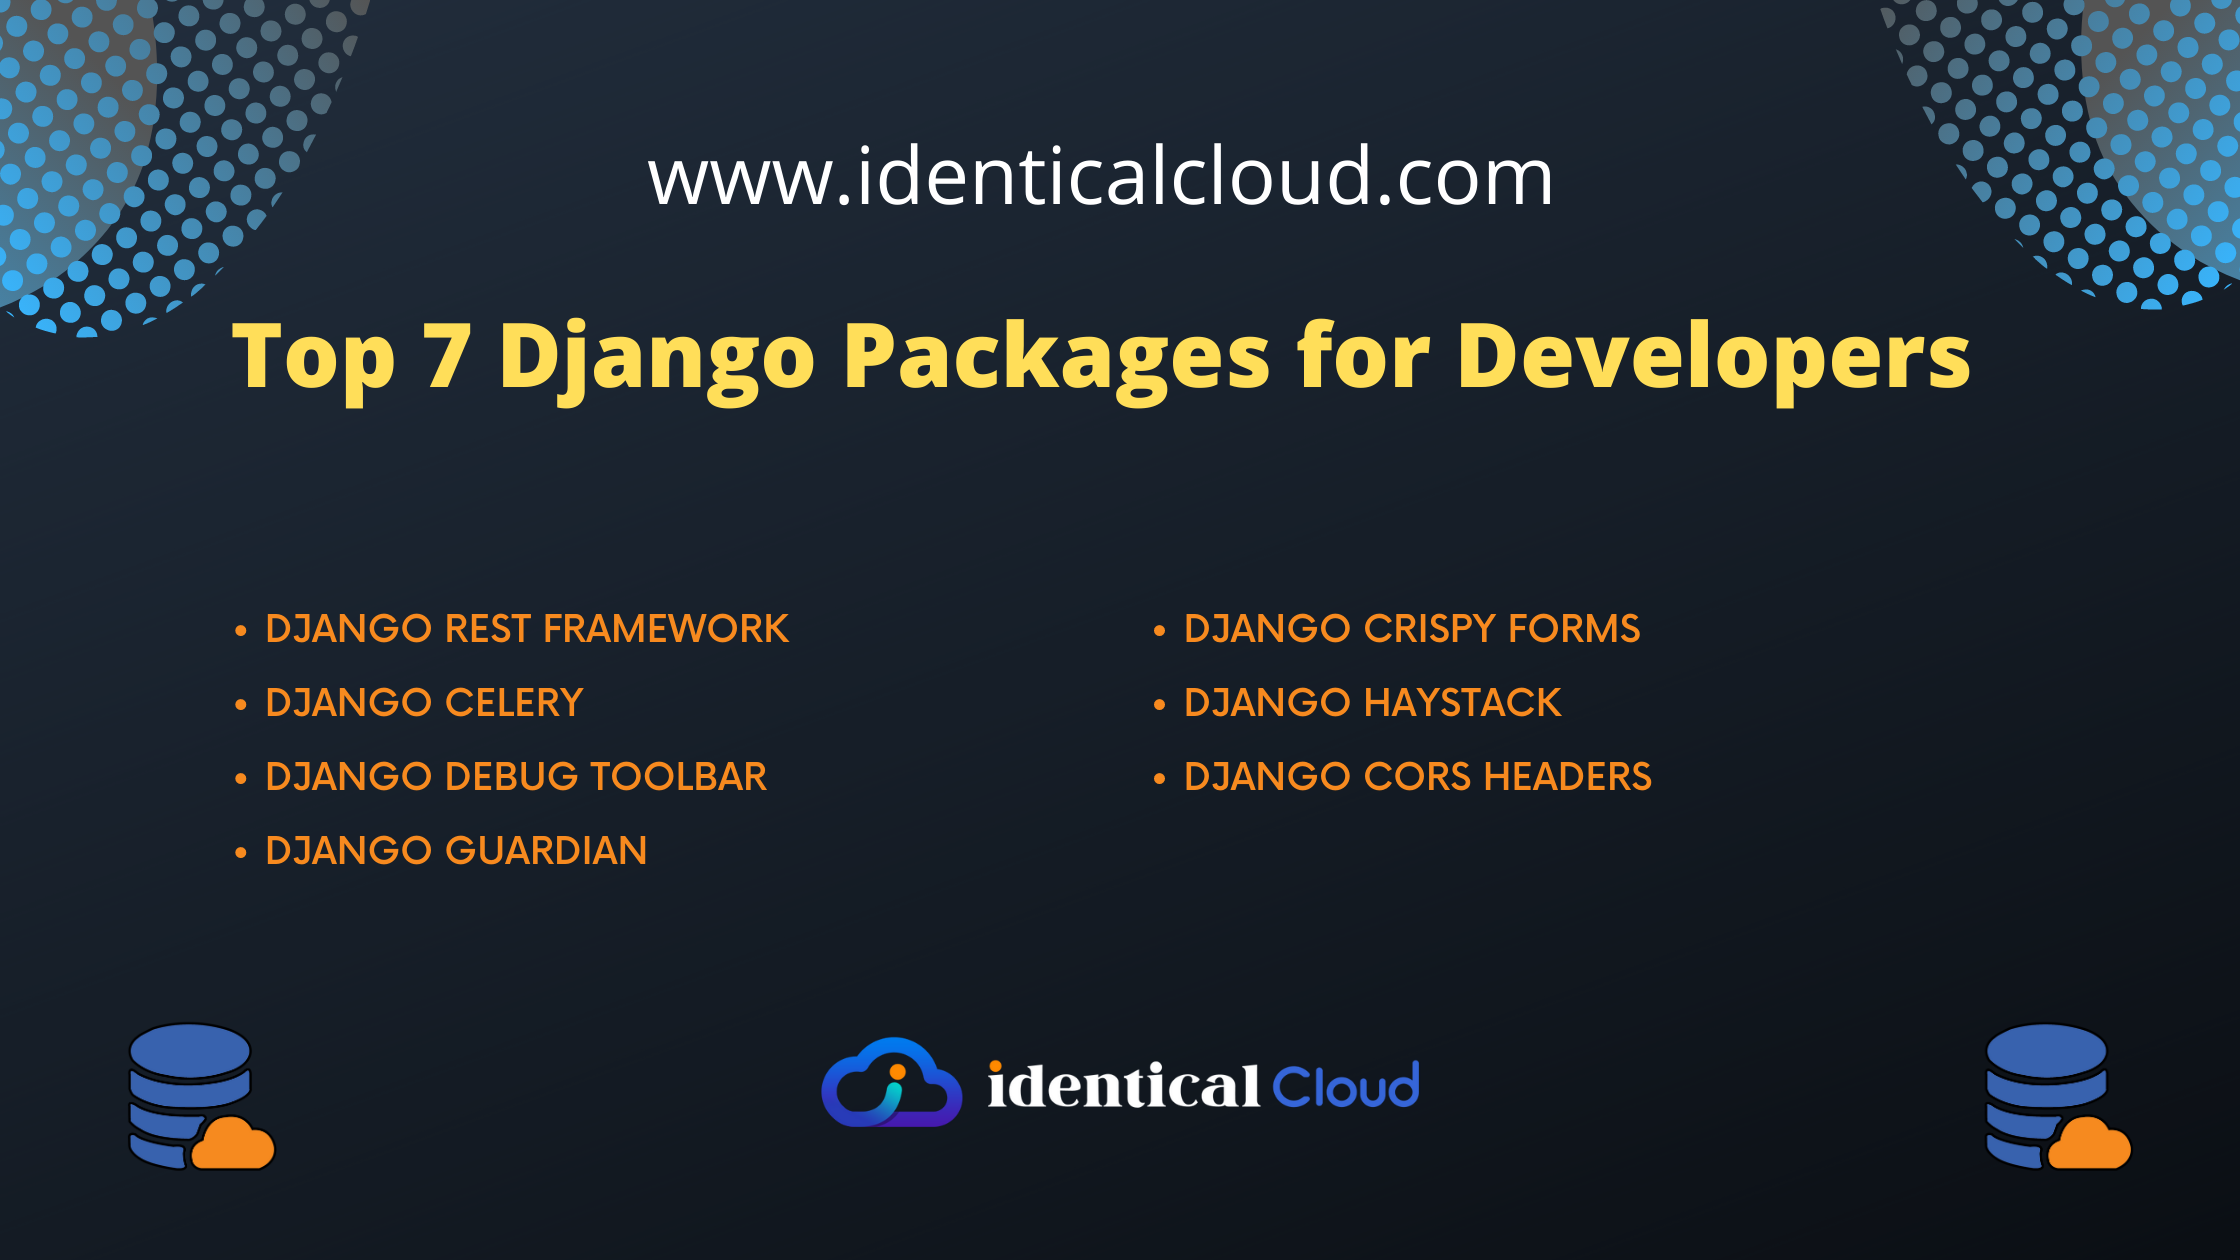 Top 7 Django Packages for Developers - identicalcloud.com